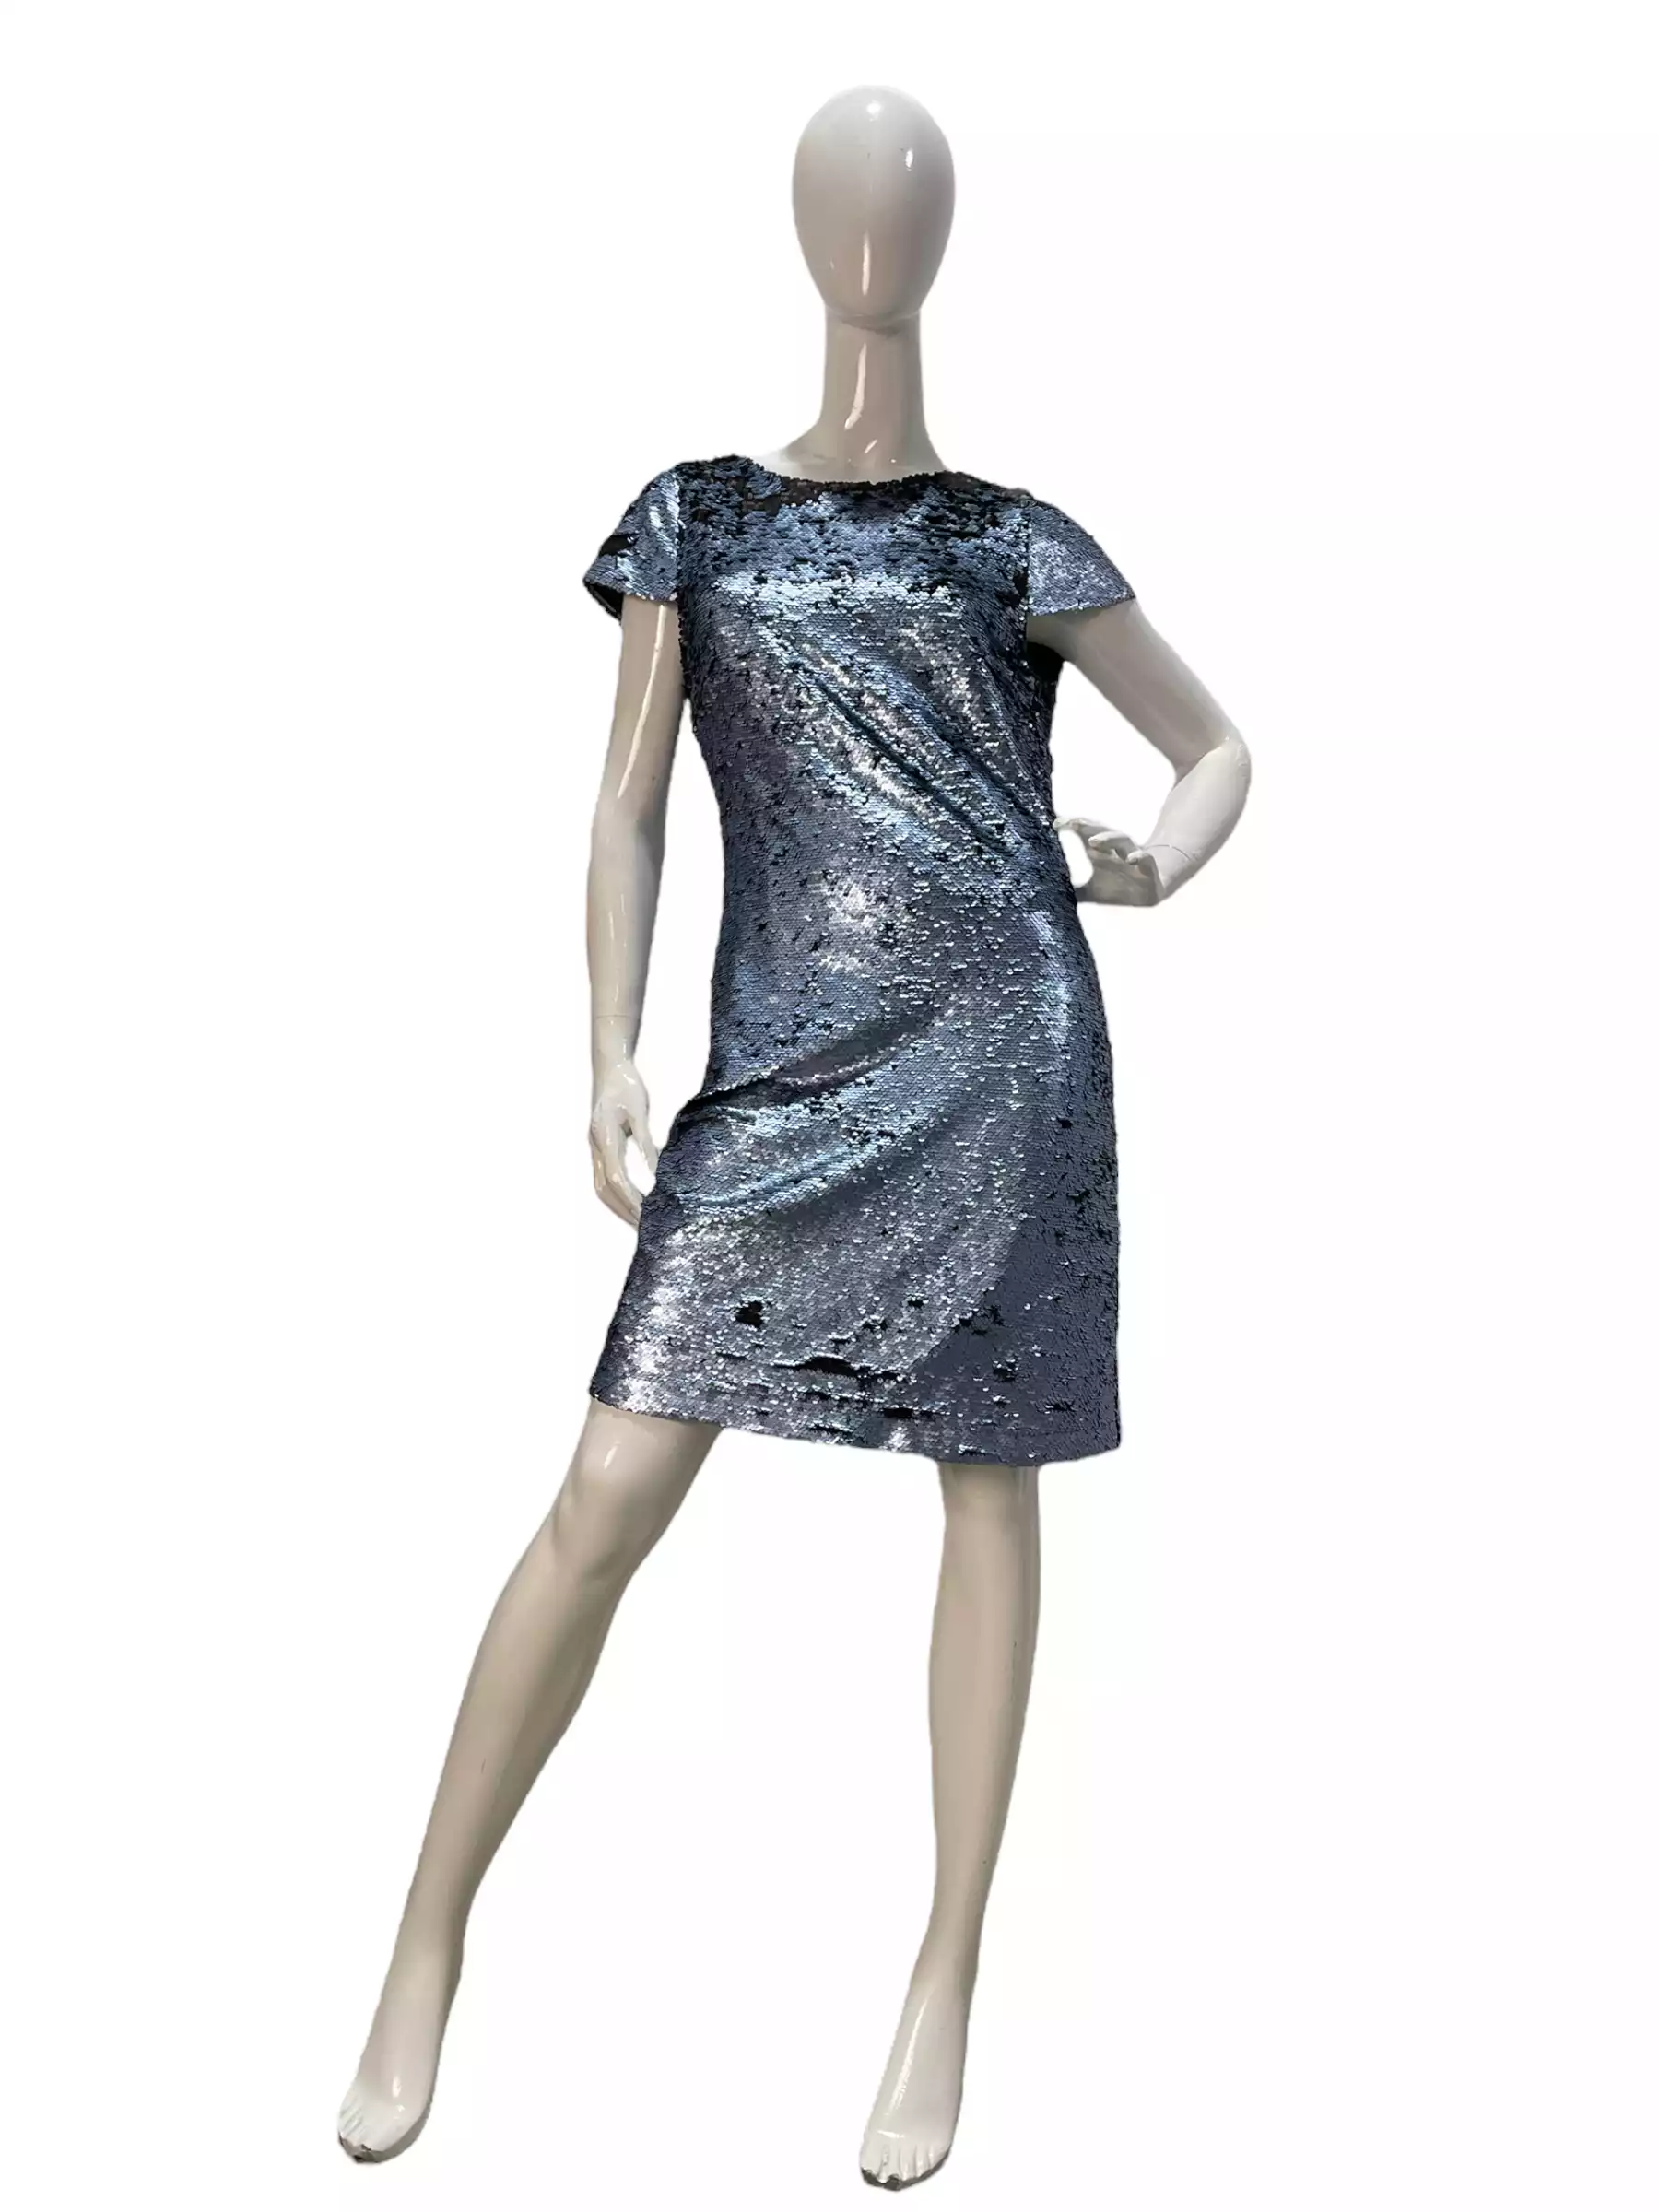 Dress by Sam Edelman